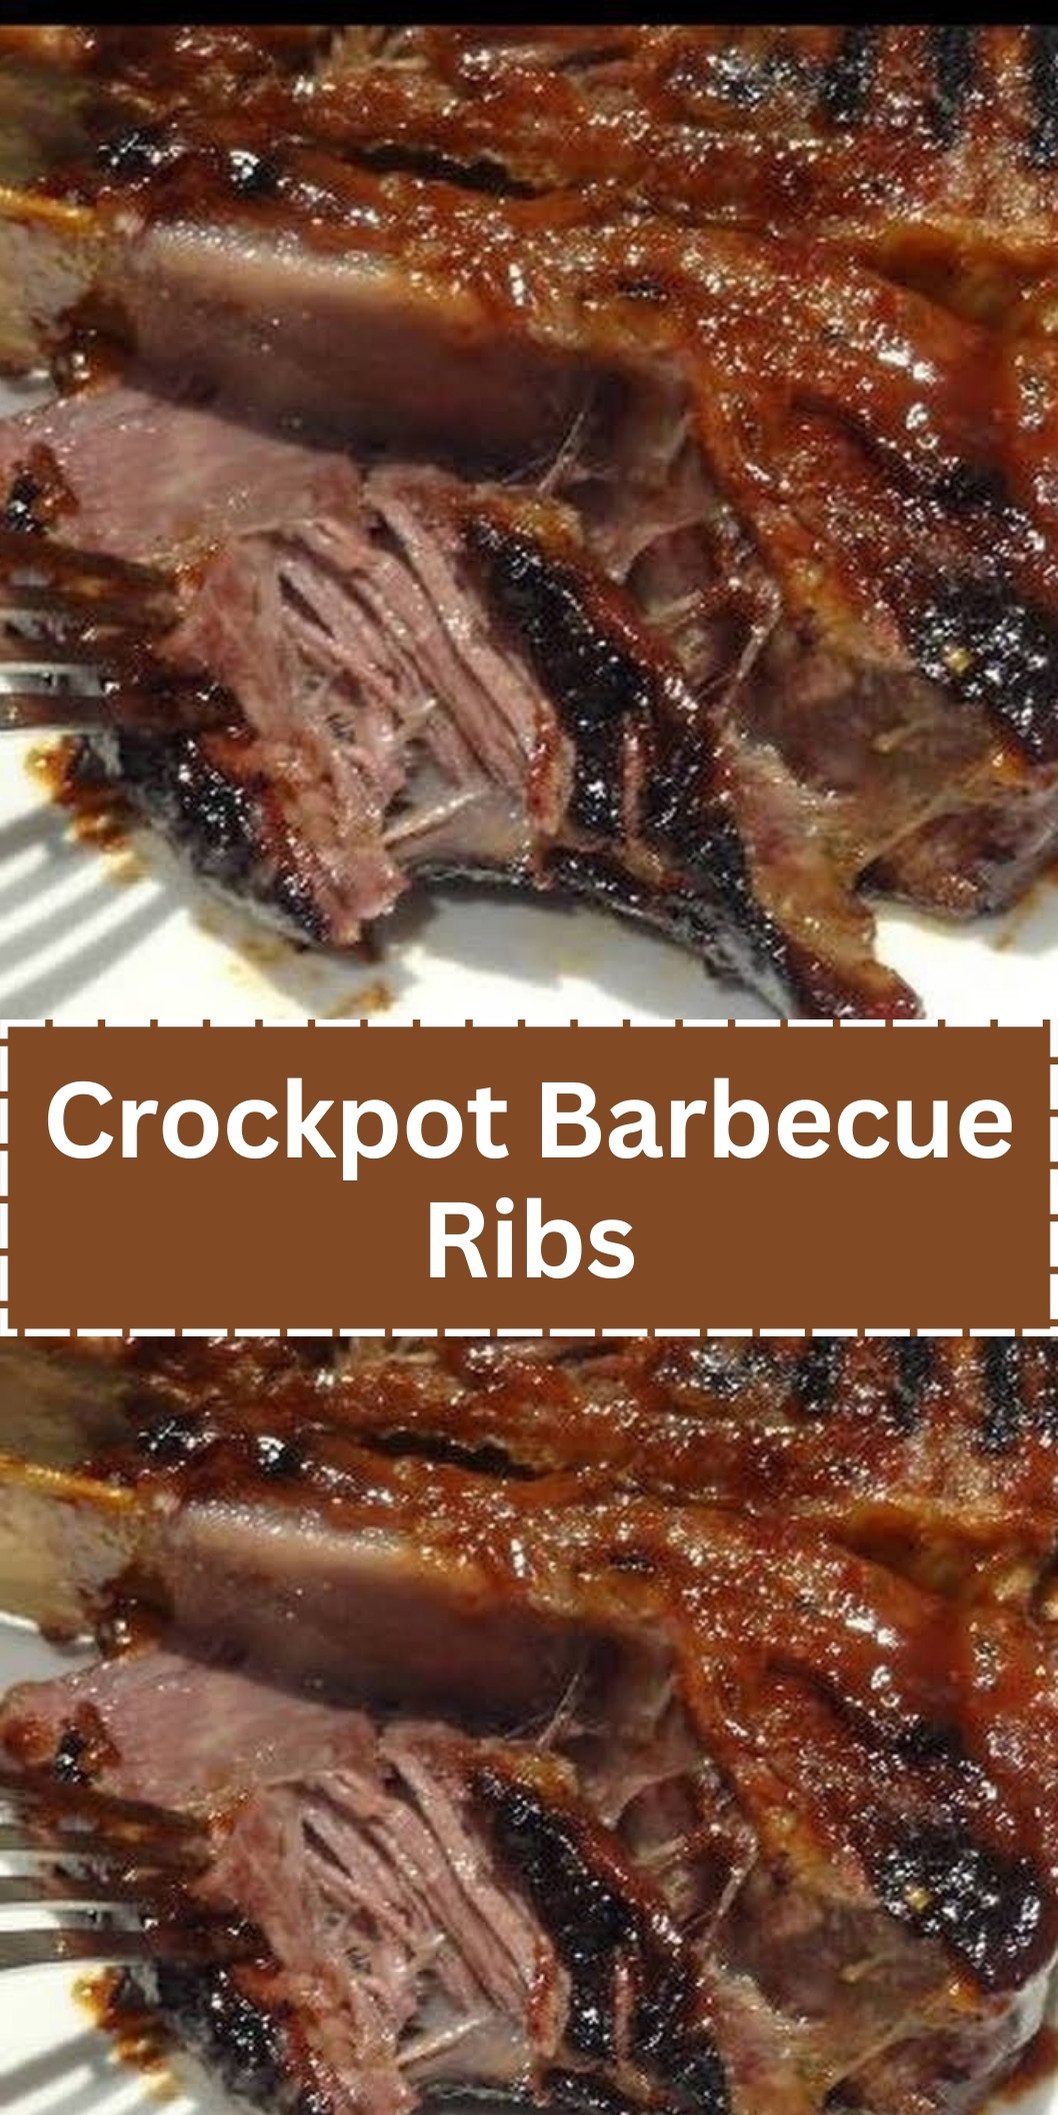 Crockpot Barbecue Ribs